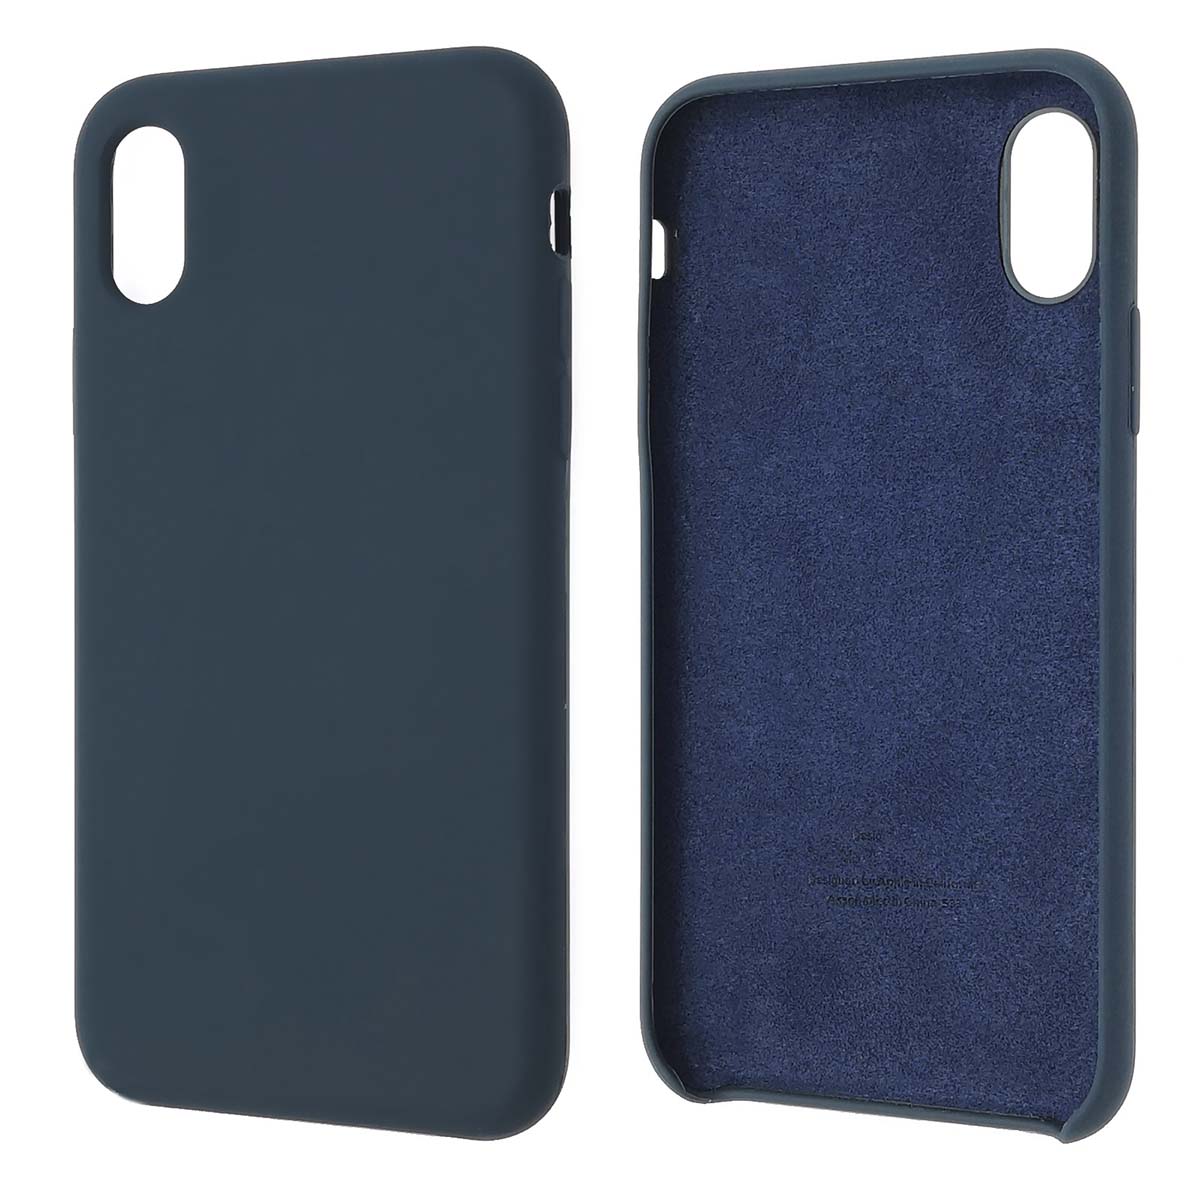 Чехол накладка Silicon Case для APPLE iPhone X, iPhone XS, силикон, бархат, цвет маренго